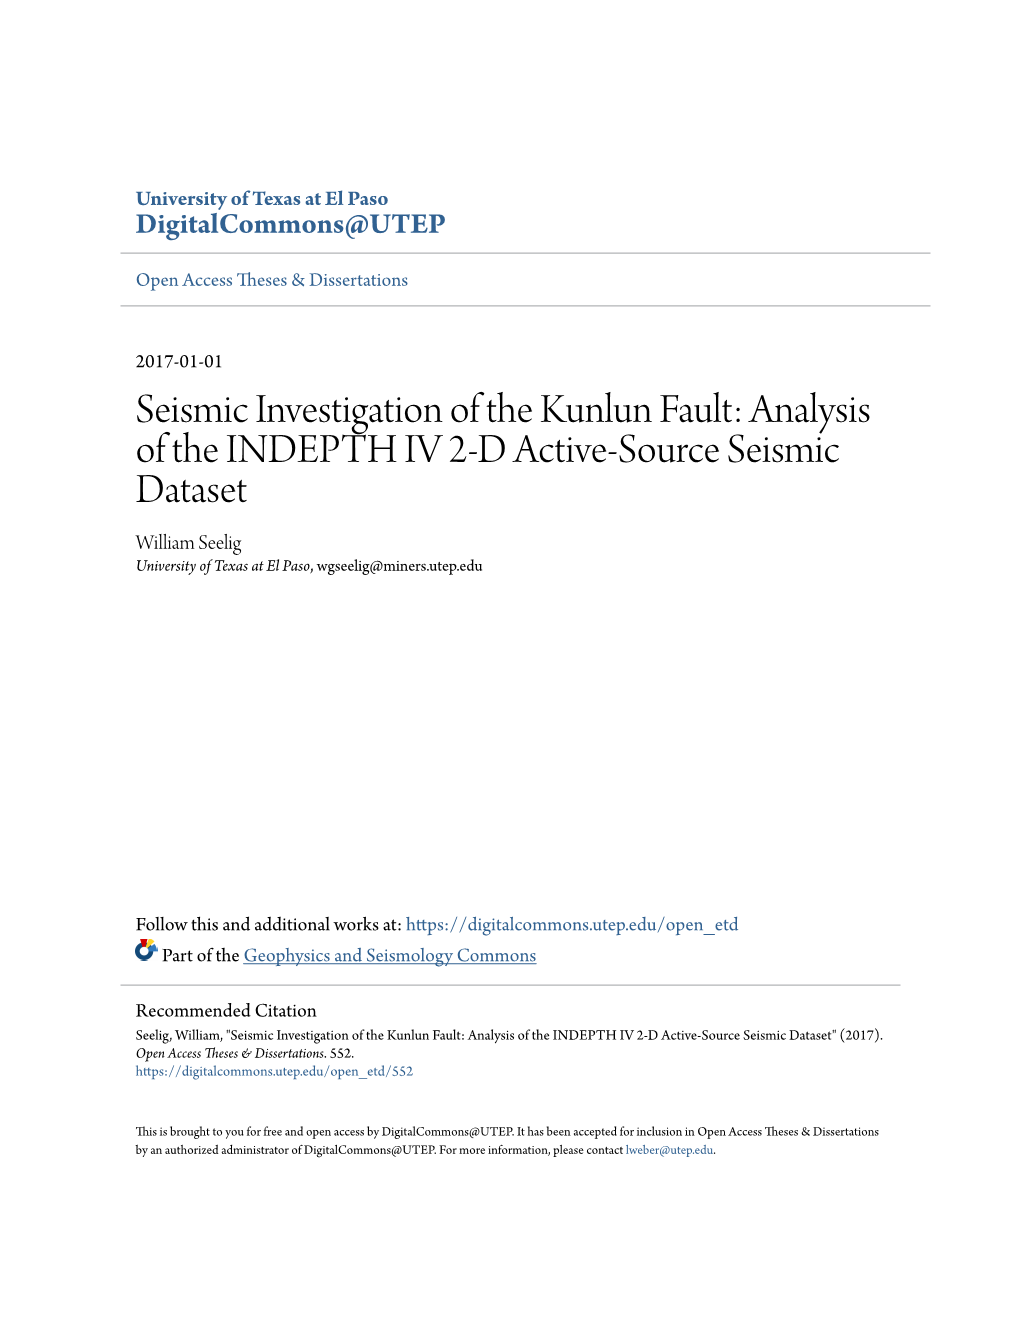 Seismic Investigation of the Kunlun Fault